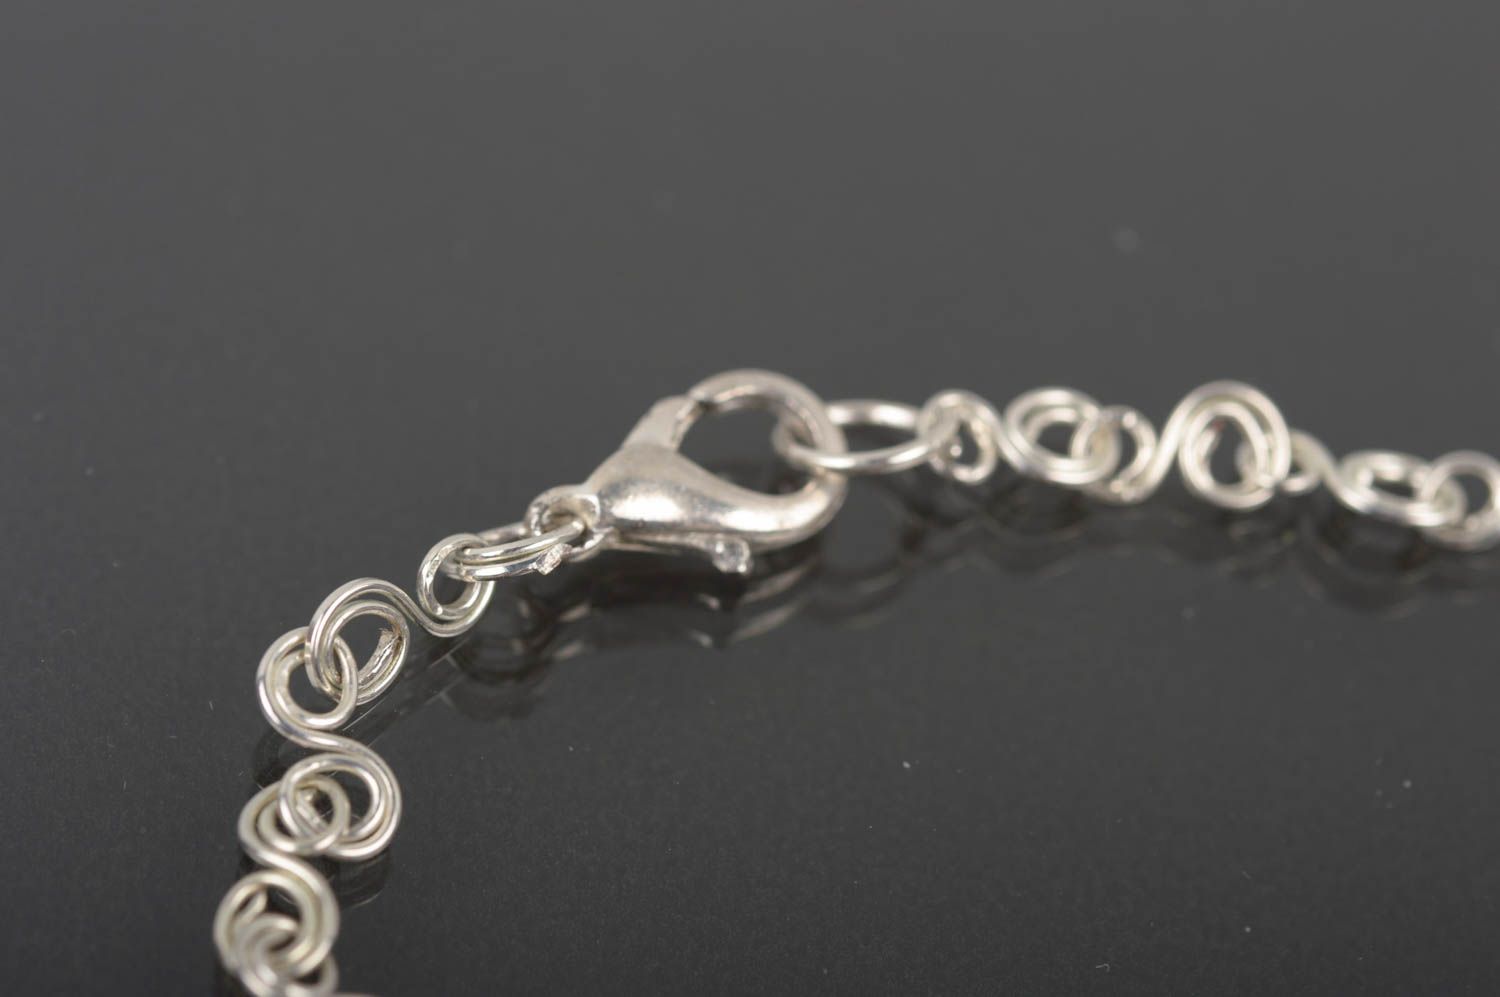 Stylish handmade beaded necklace stone necklace designs bead weaving ideas photo 4